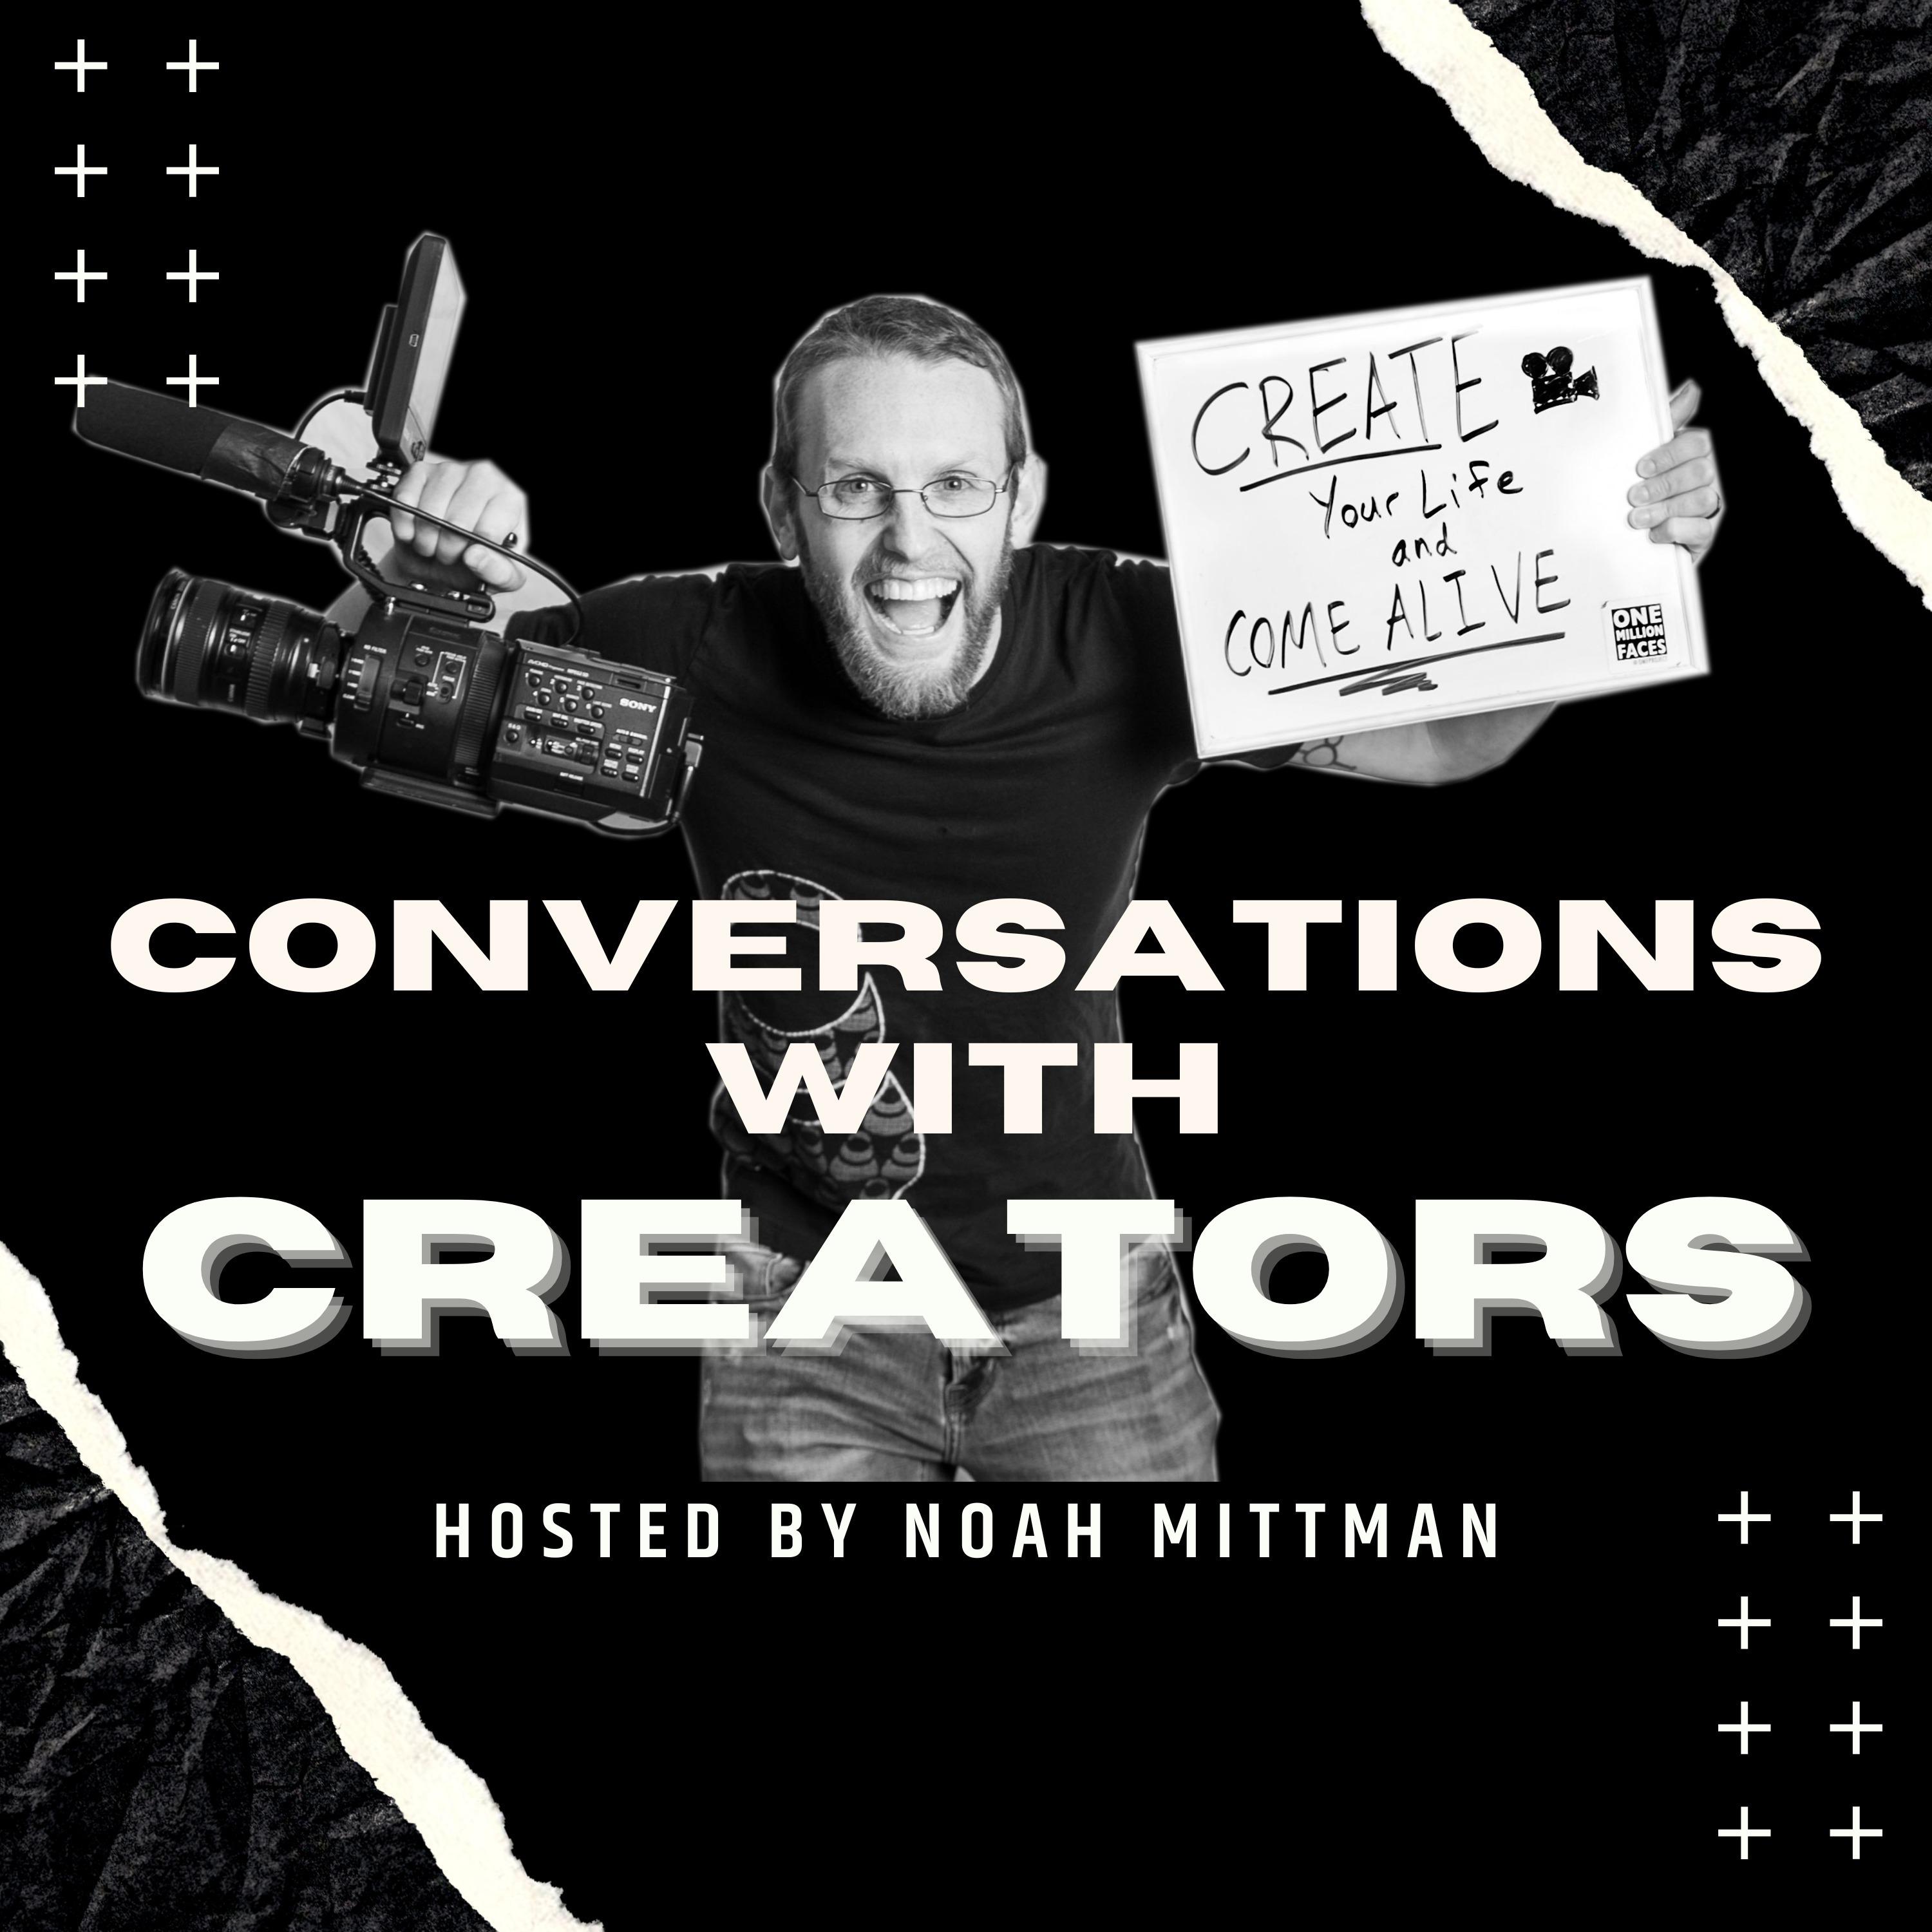 Conversations with Creators